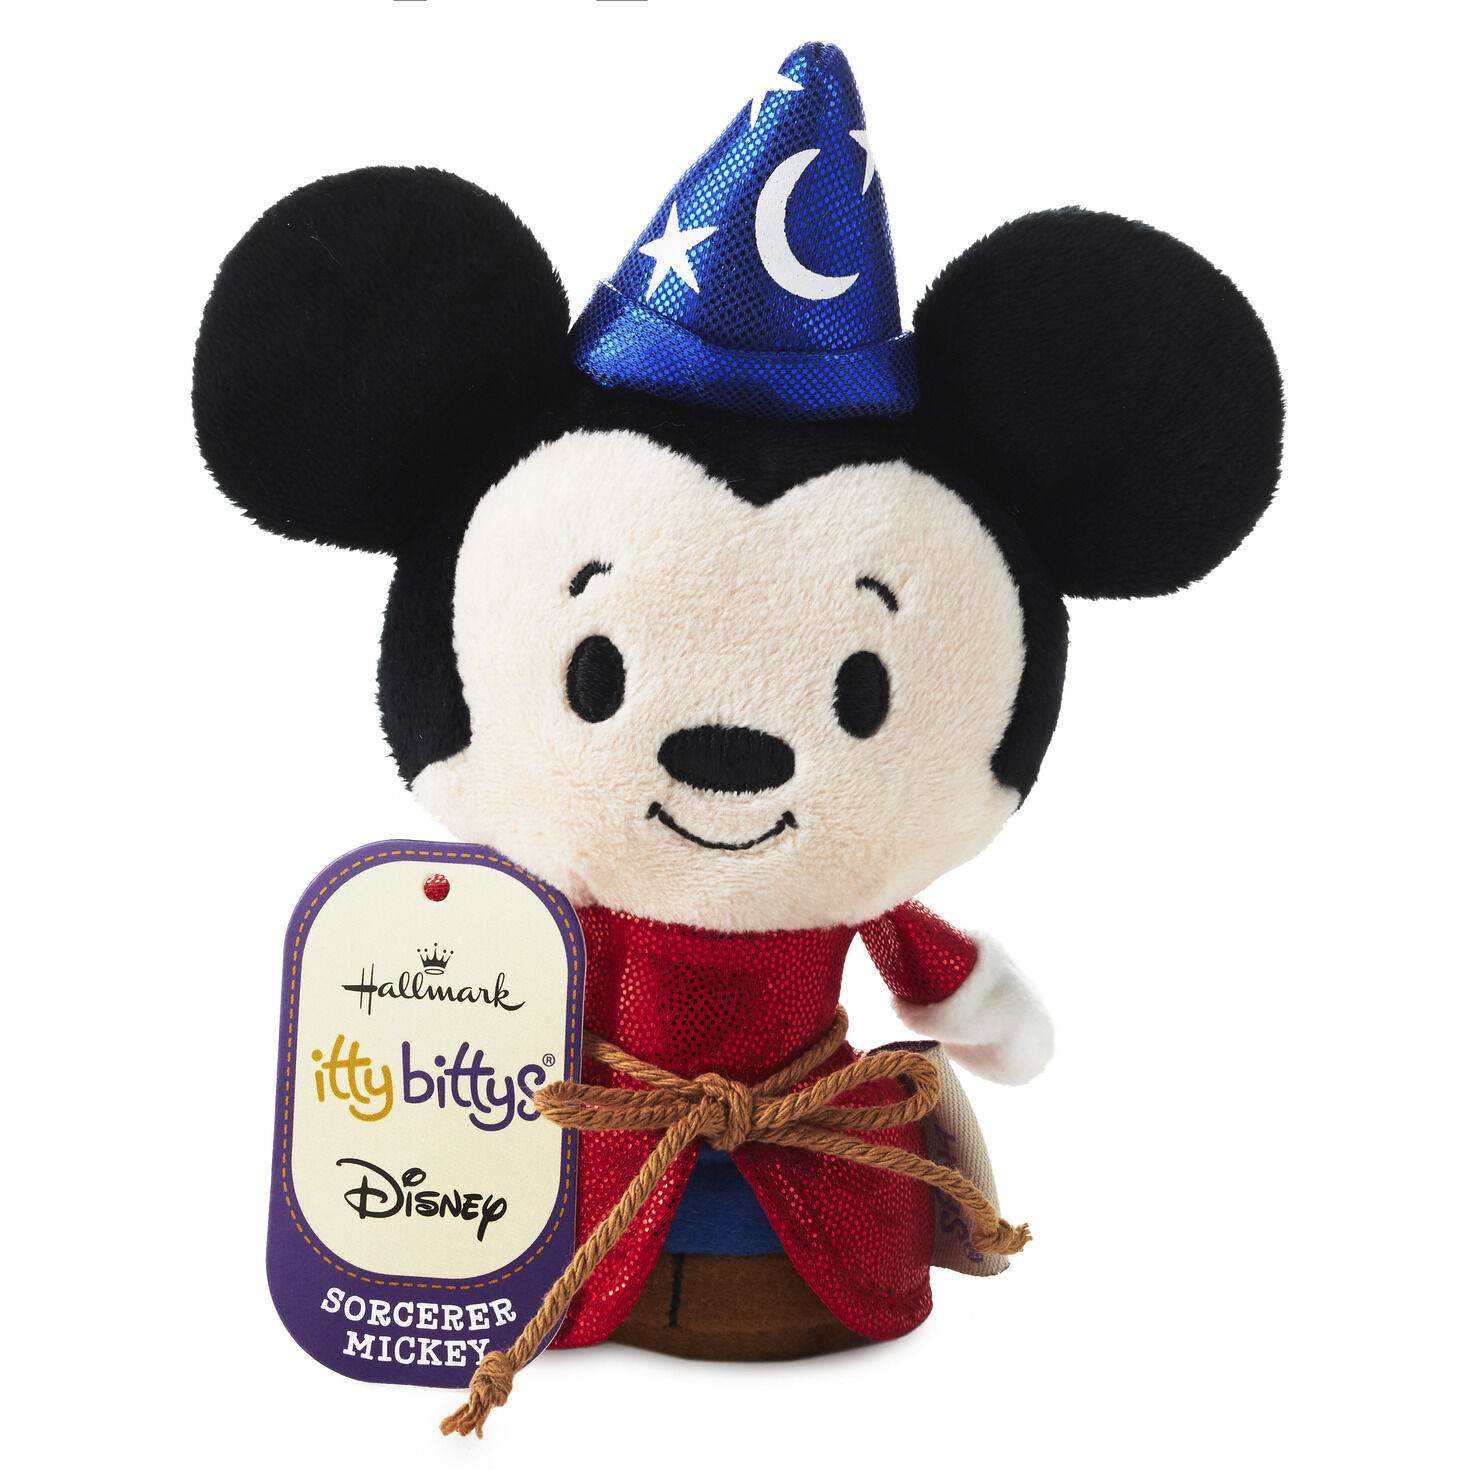 Hallmark Itty Bittys Disney Sorcerer Mickey plush New